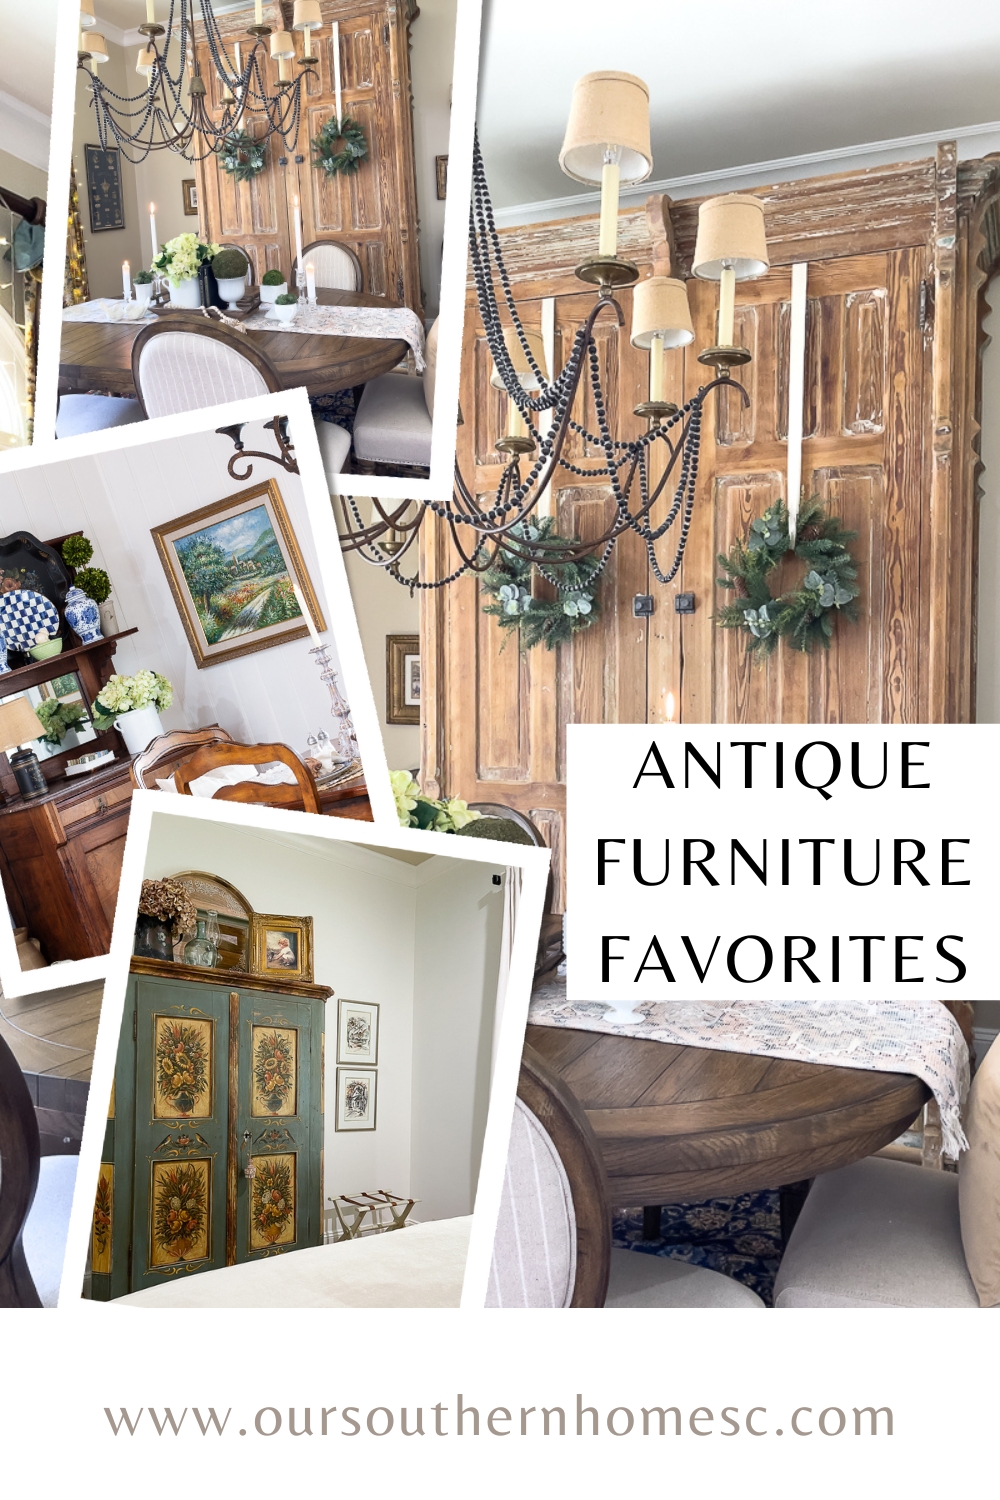 https://www.oursouthernhomesc.com/wp-content/uploads/antique-furniture-favorites.jpeg